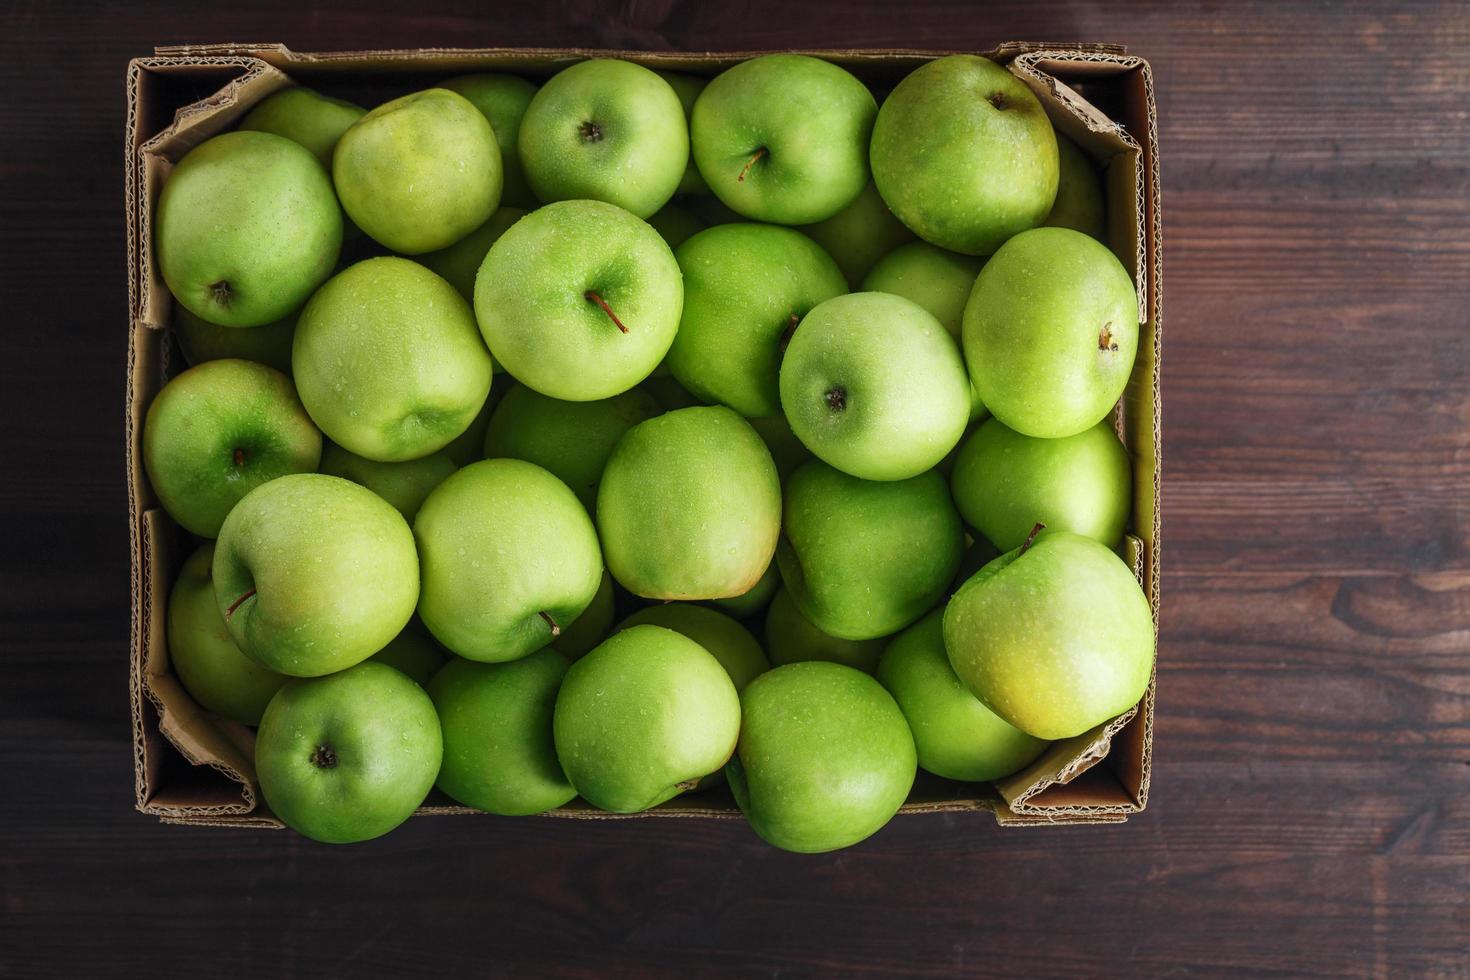 manzanas verdes en una caja sobre una mesa de madera, vista superior. foto